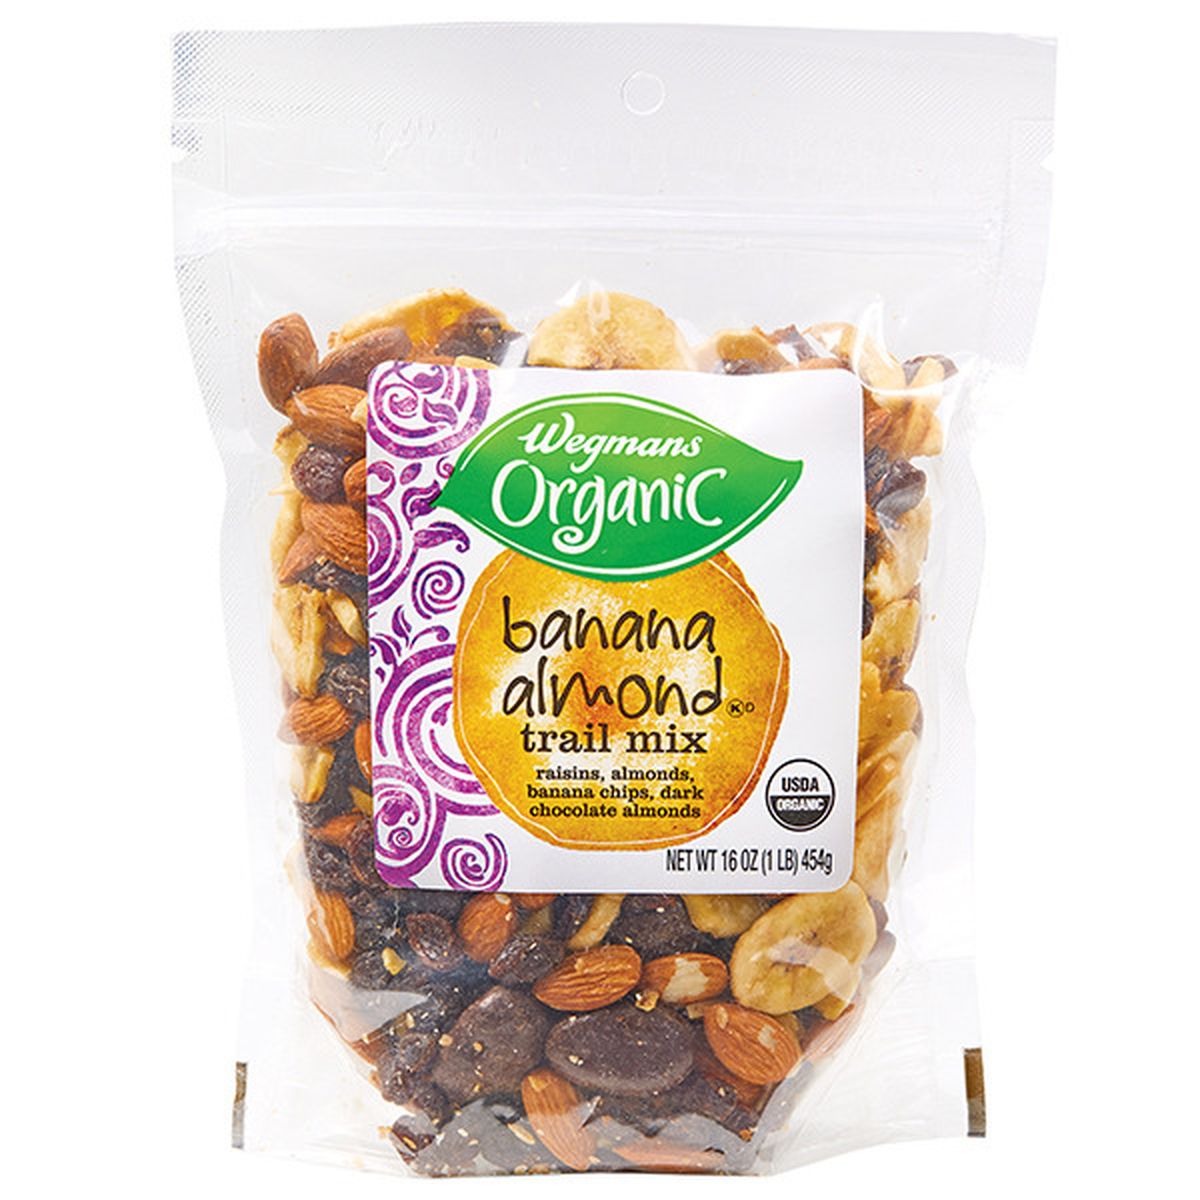 Calories in Wegmans Organic Banana Almond Trail Mix